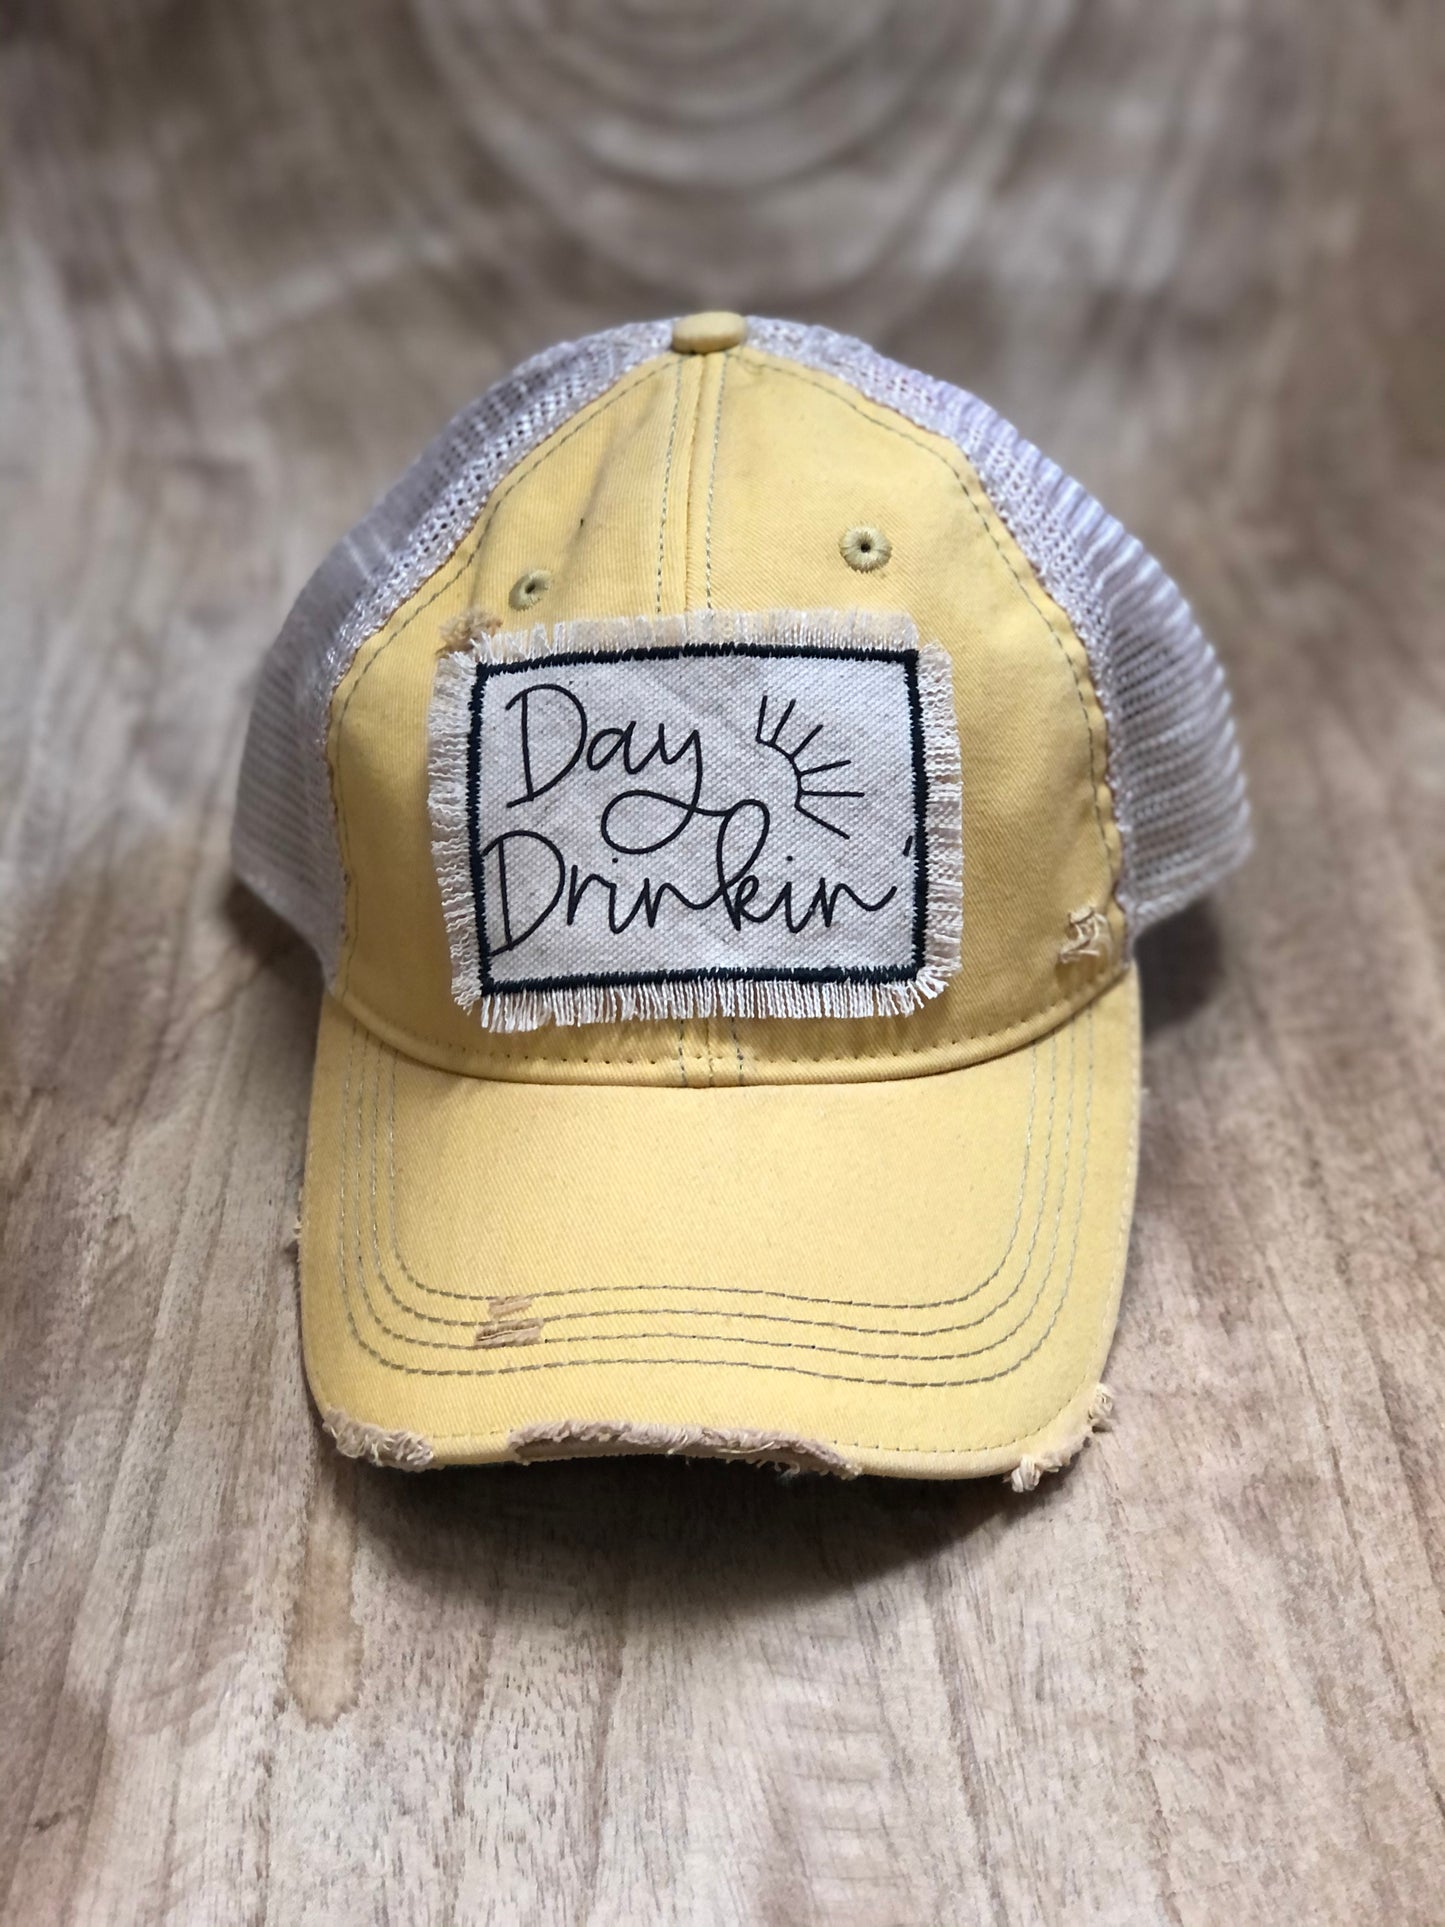 Day Drinkin distressed hat